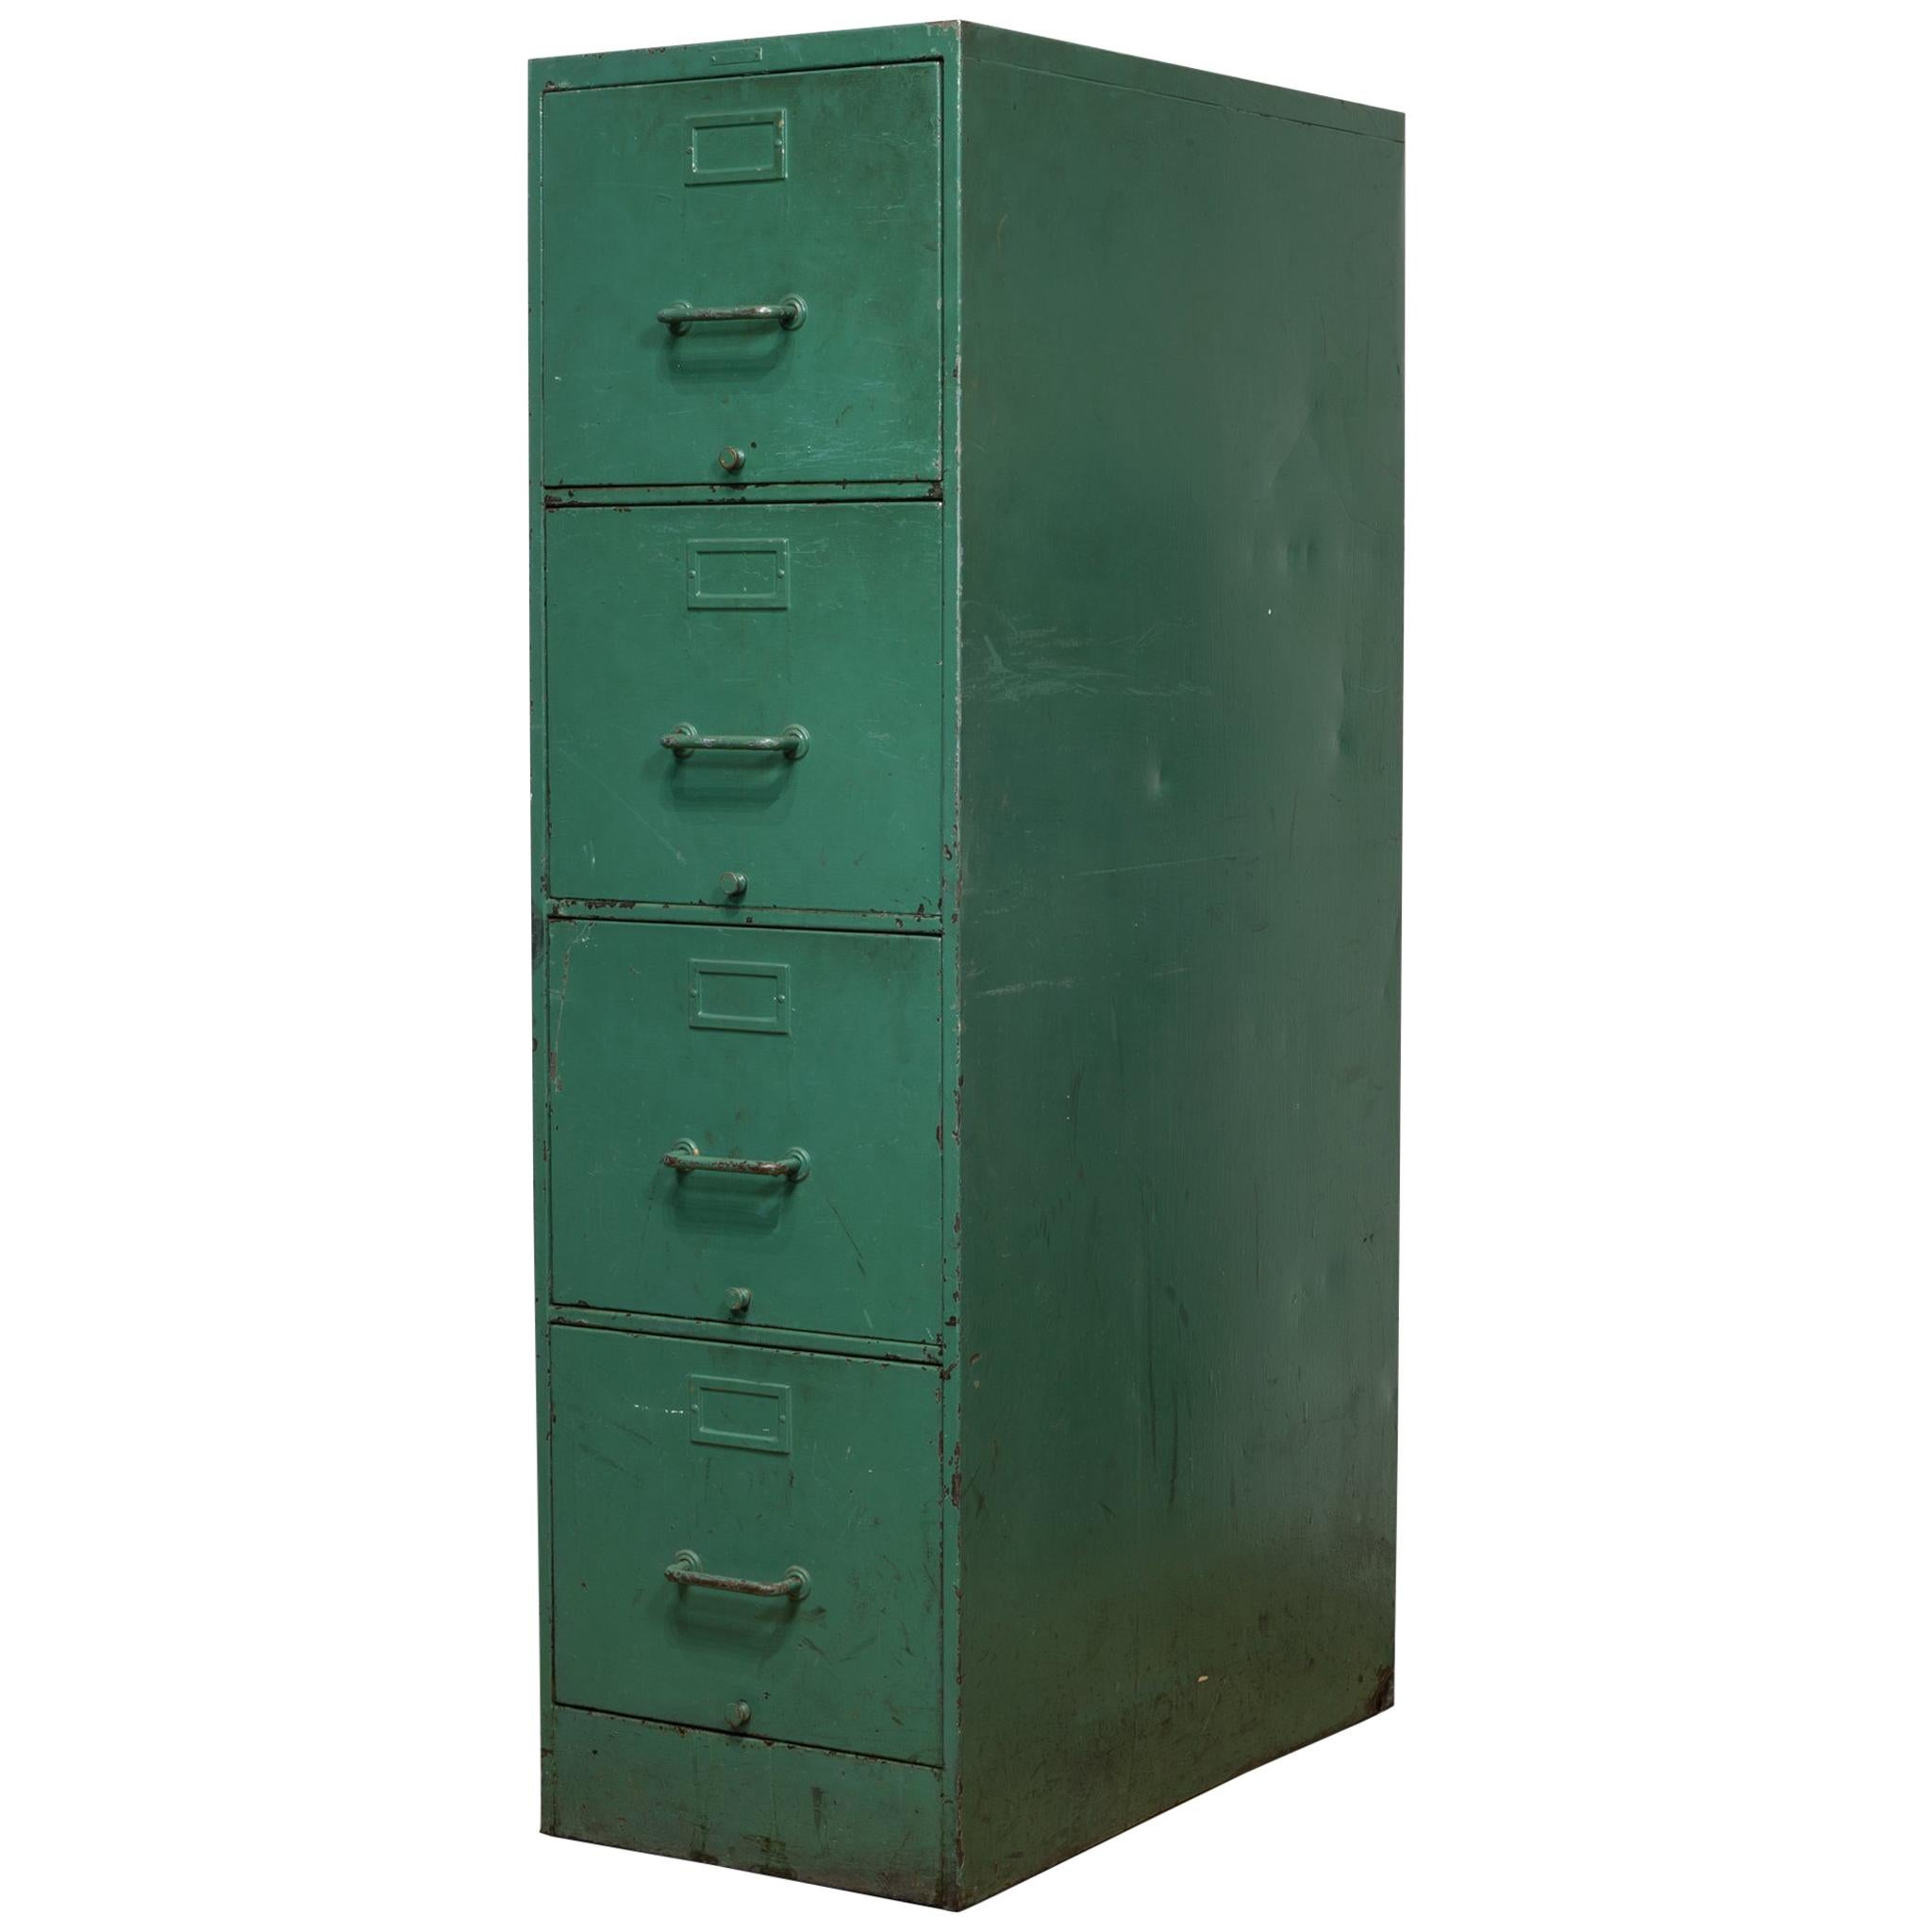 Vintage Metal Filing Cabinet:: circa 1940-1950